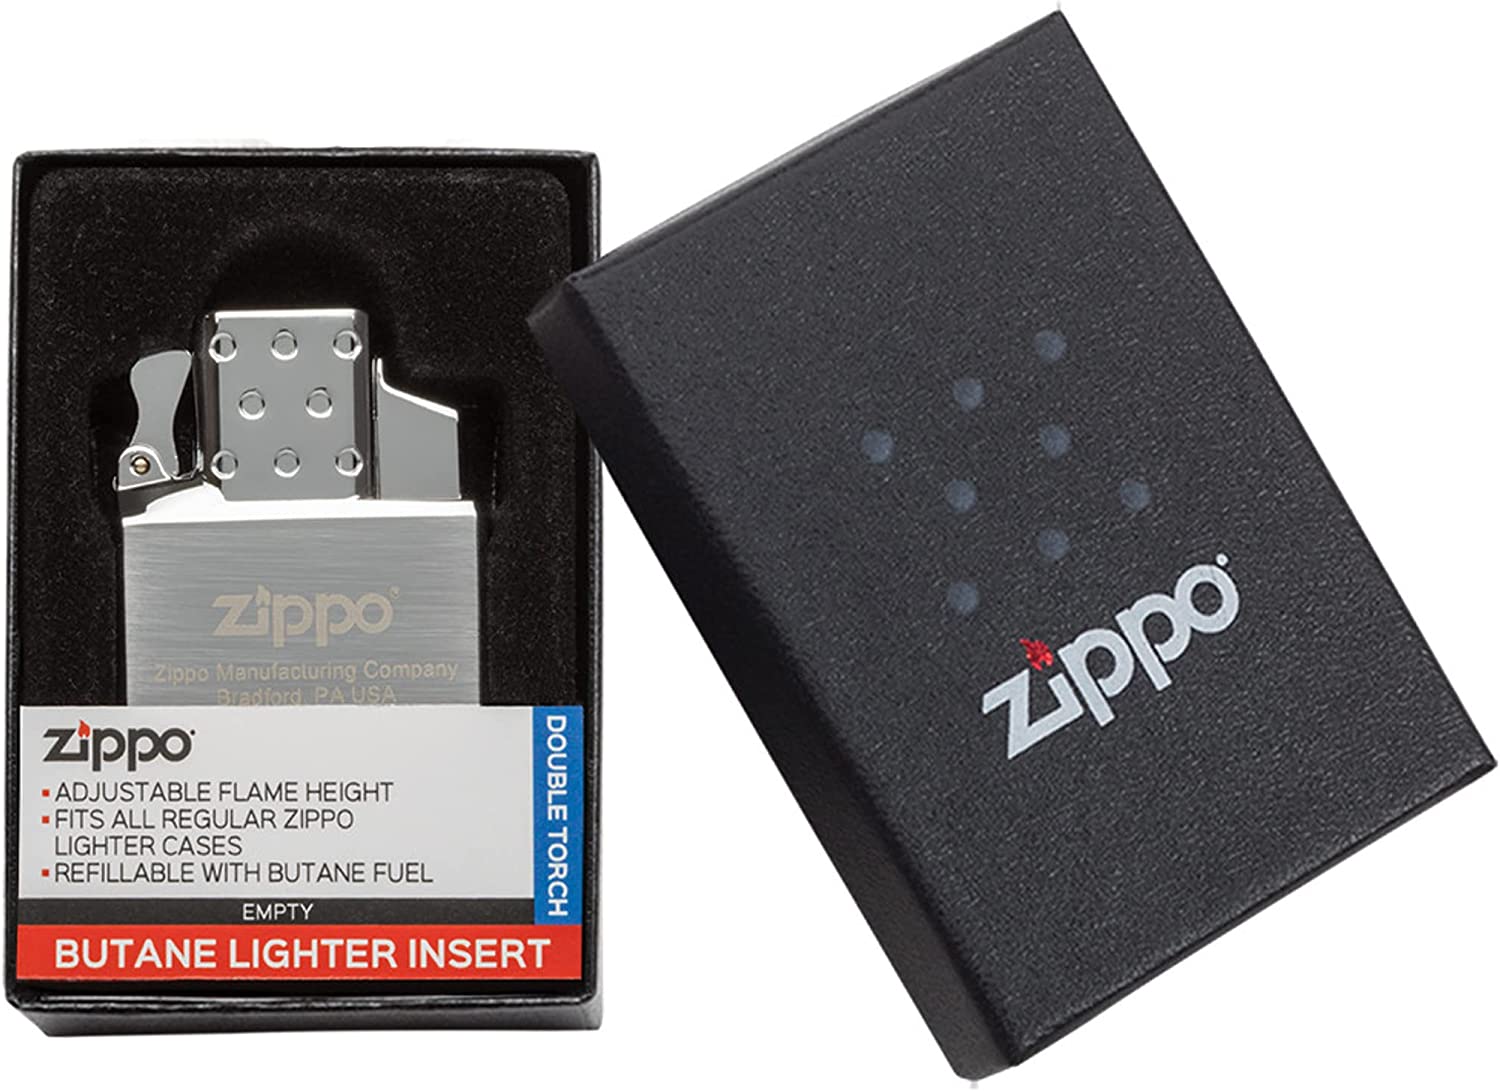 Zippo - 65827 Butane Lighter Insert - Double Torch, Refillable with butane  fuel – Pack 1